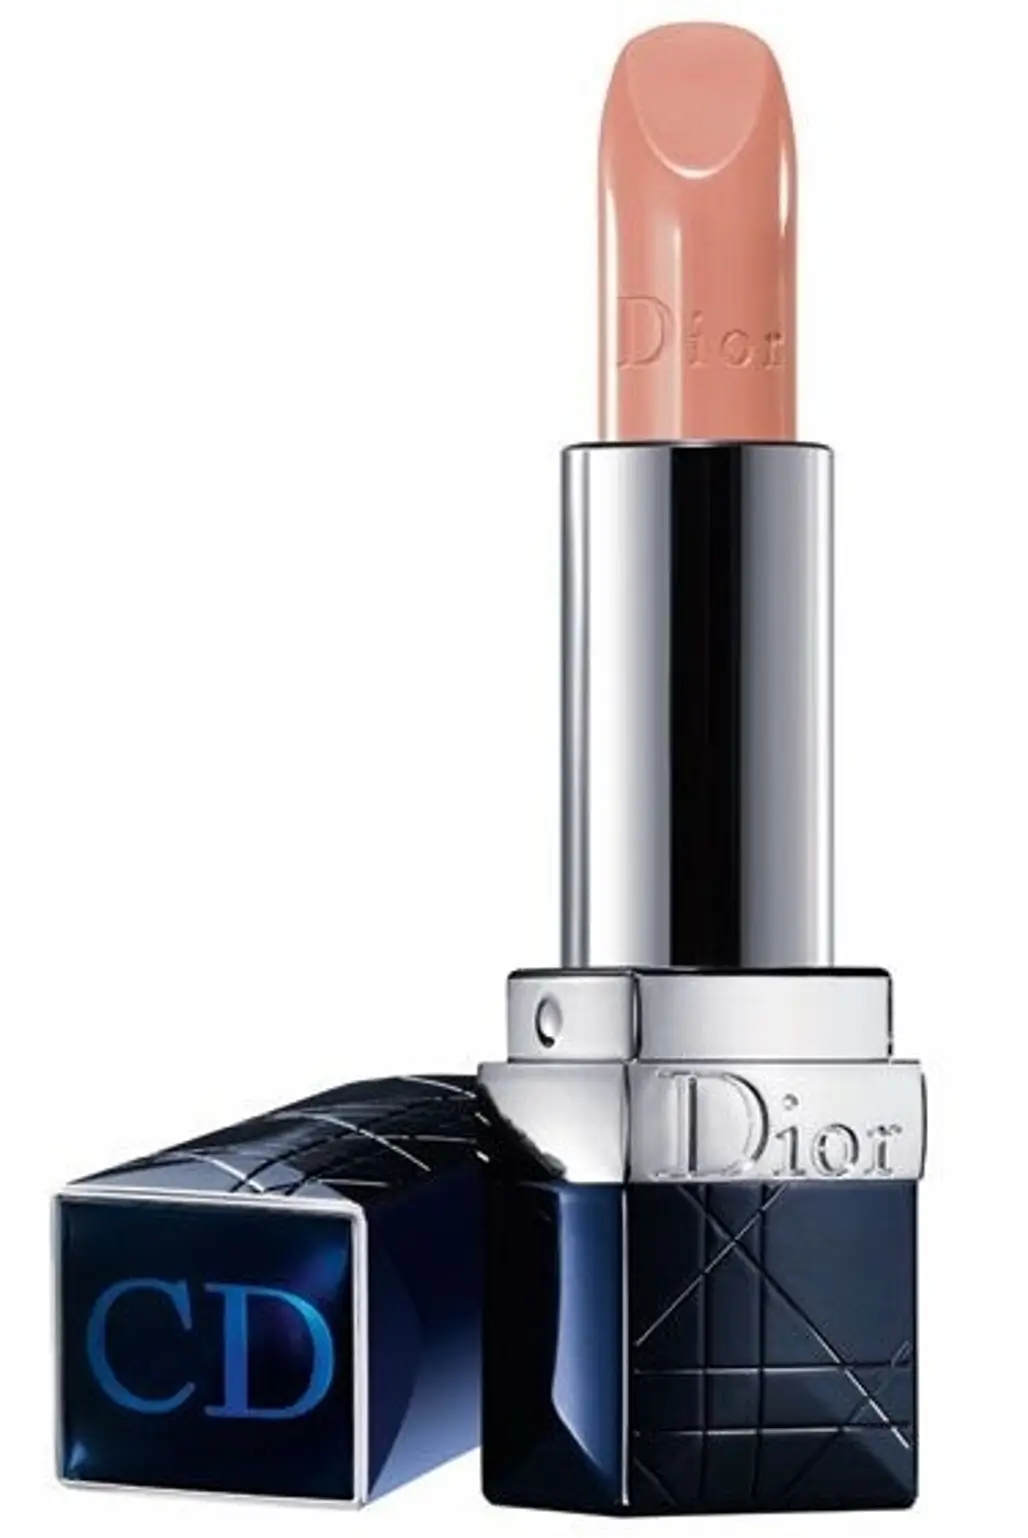 Dior Rouge Dior Lip Color in Angelique Beige